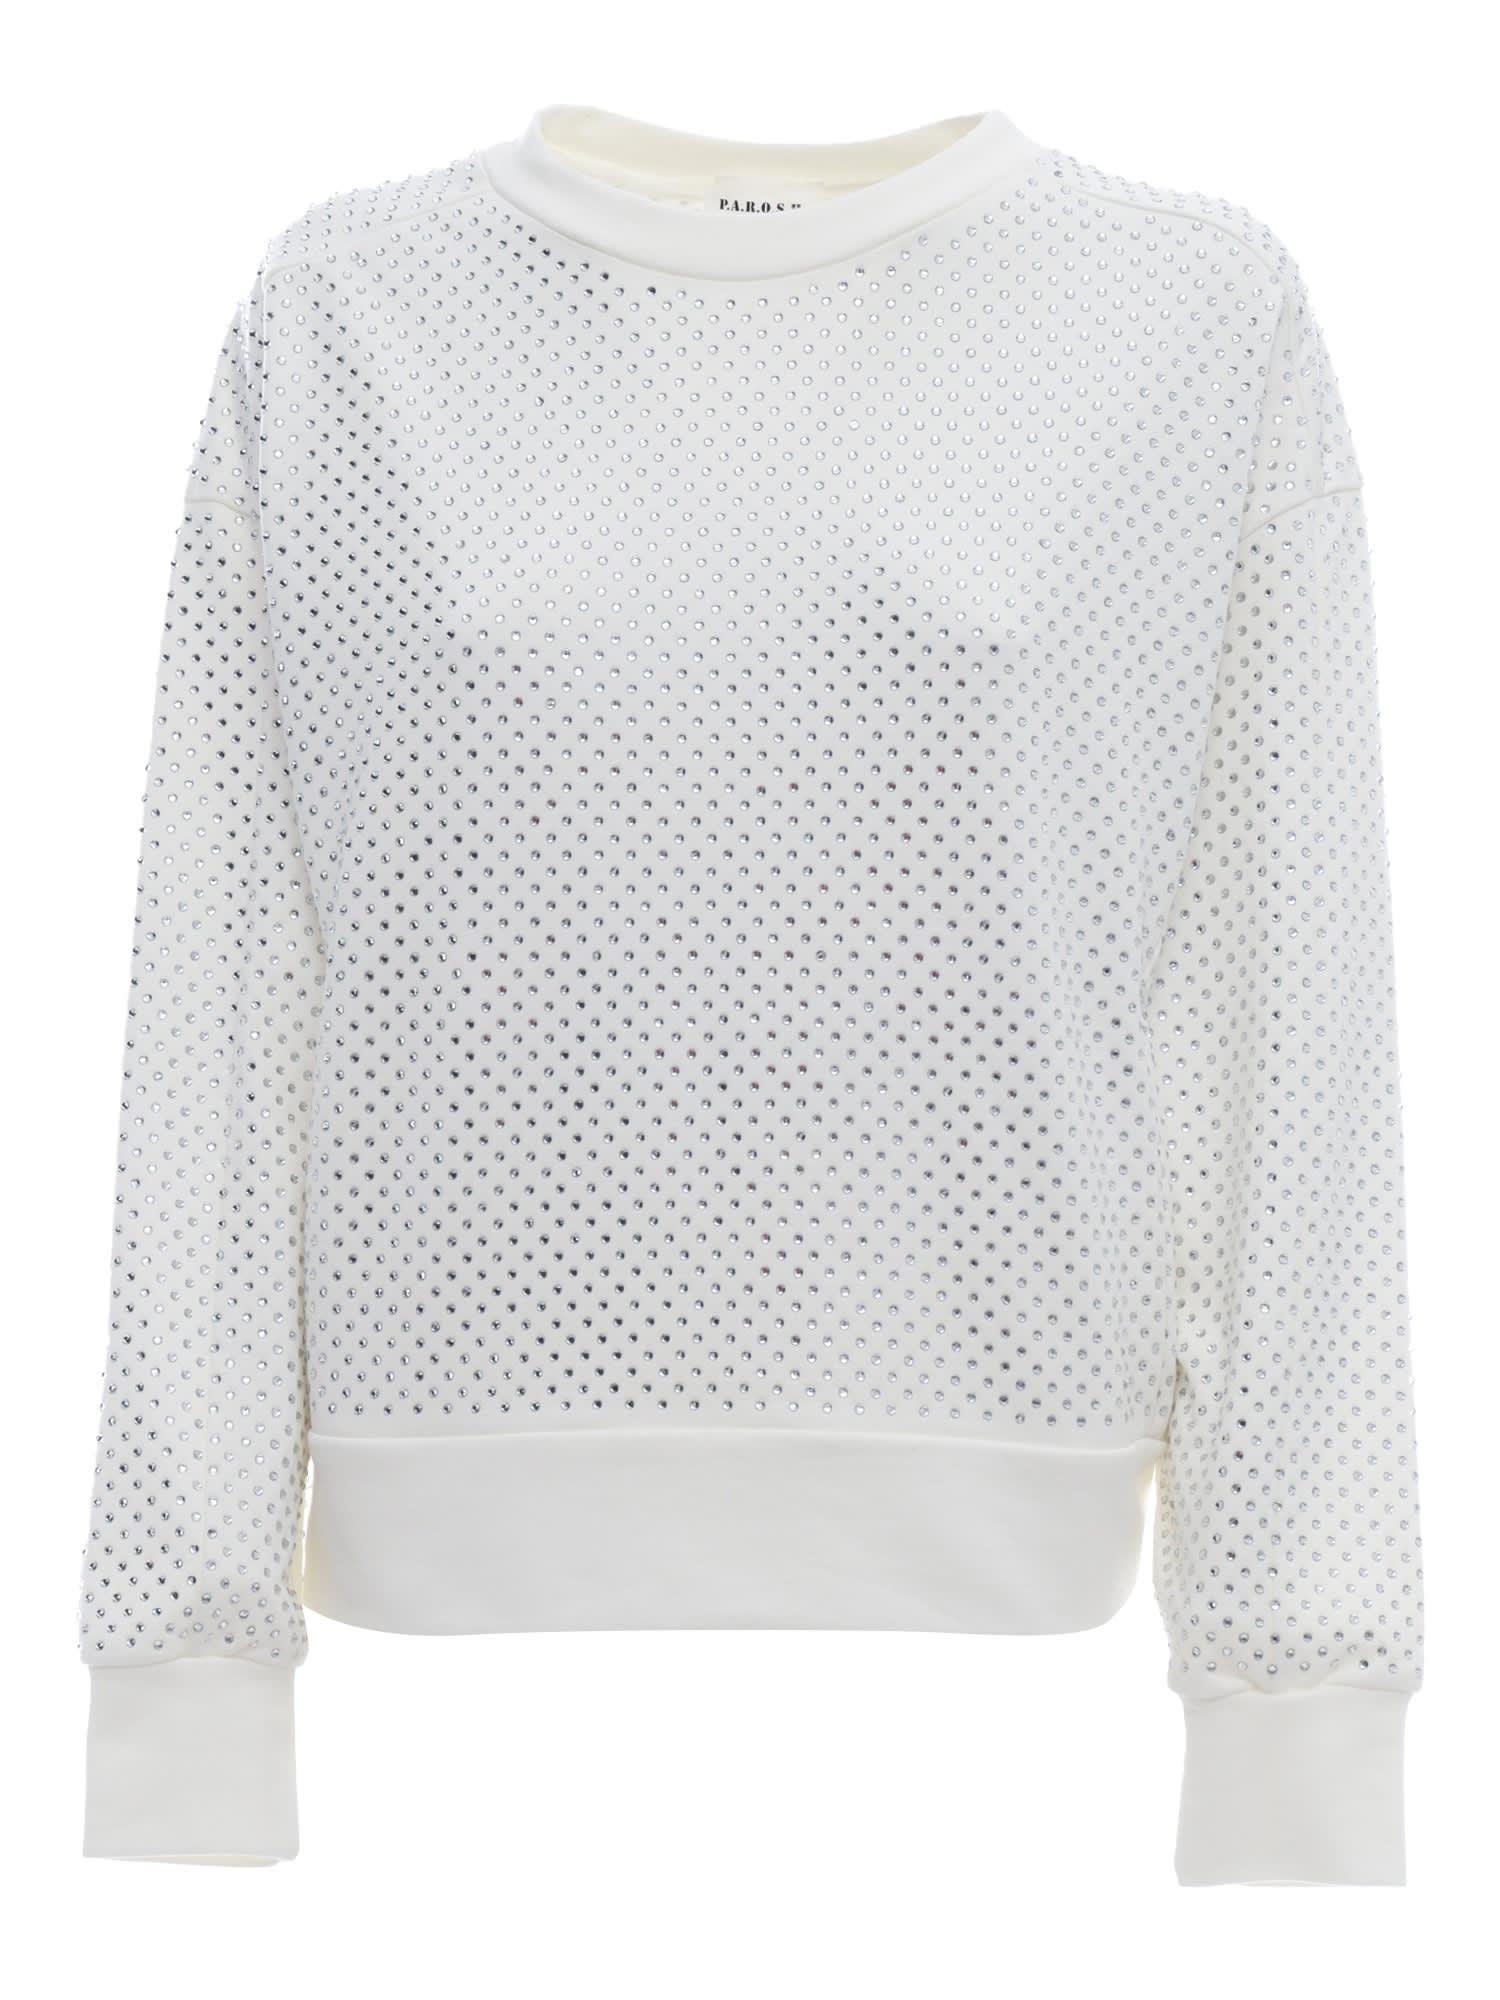 P.A.R.O.S.H. Sweatshirt With Rhinestones in White | Lyst